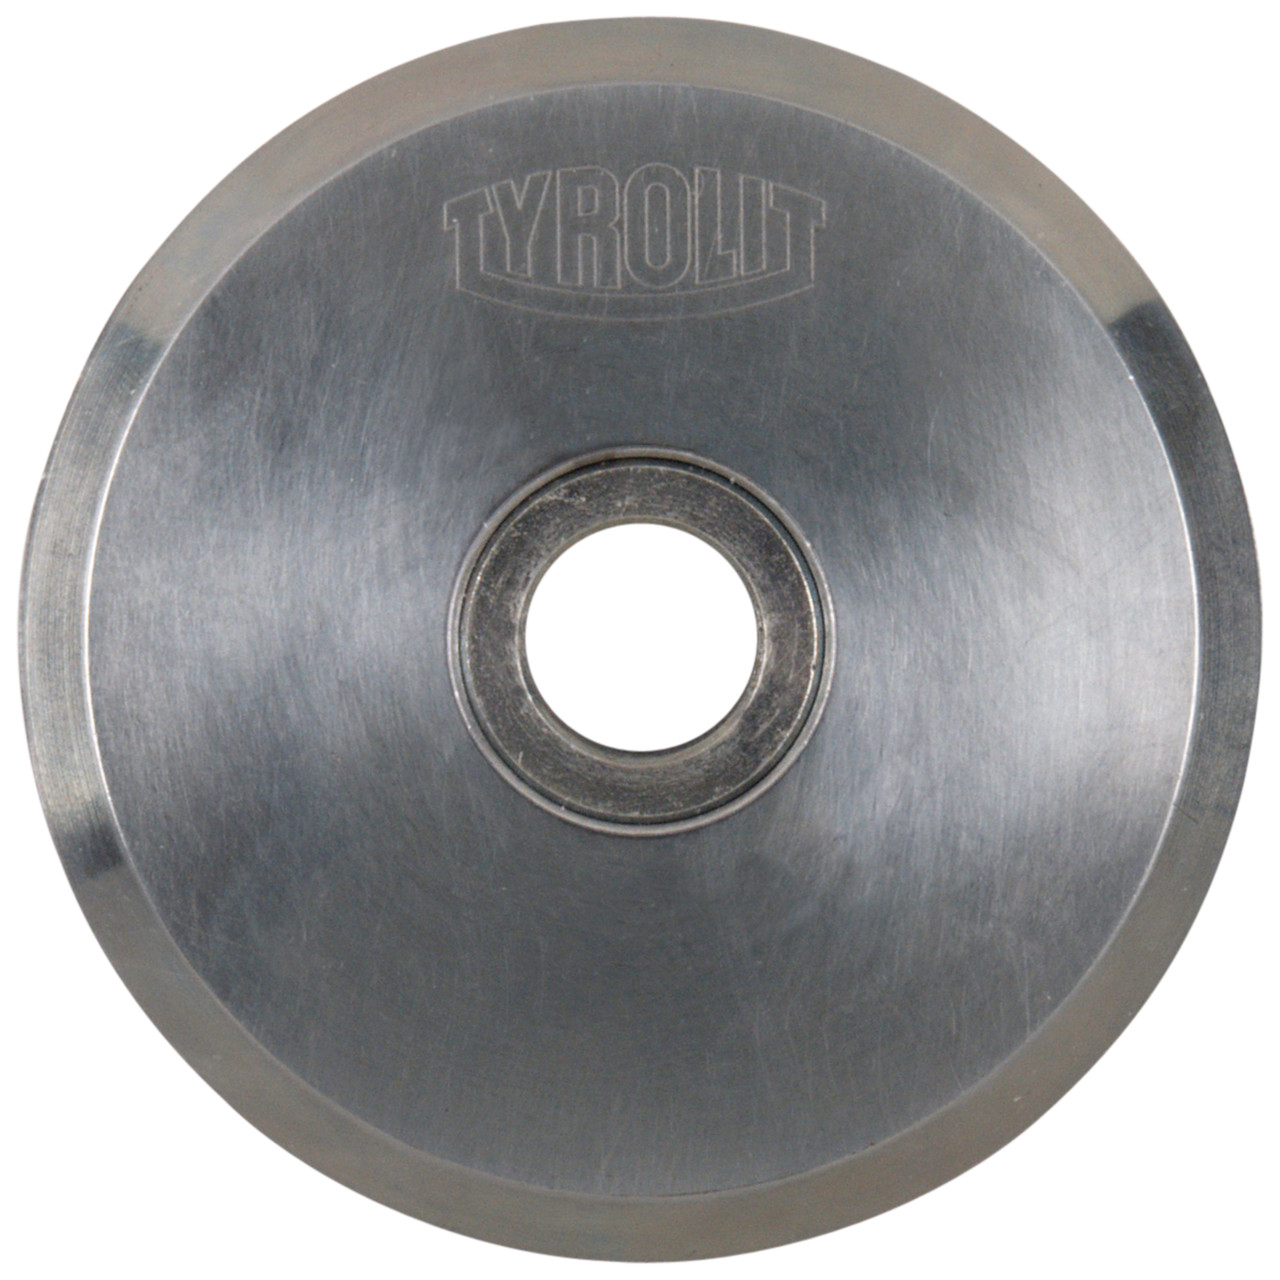 Tyrolit Accessory D 76 For cutting discs, shape: 100SFL, Art. 614644